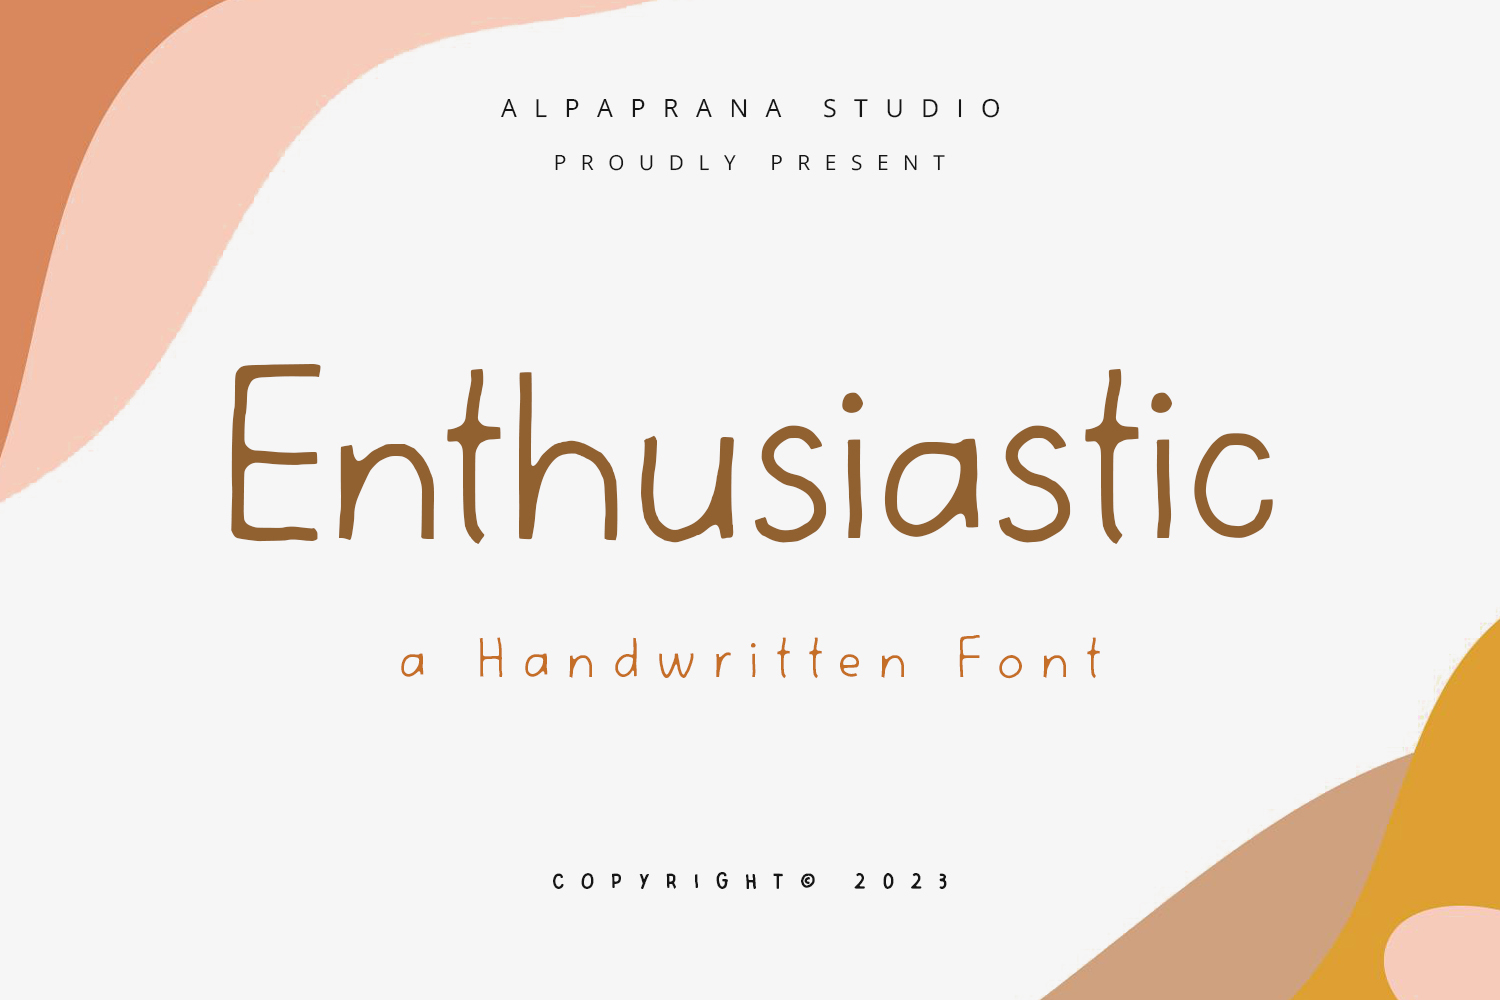 Enthusiastic Free Font